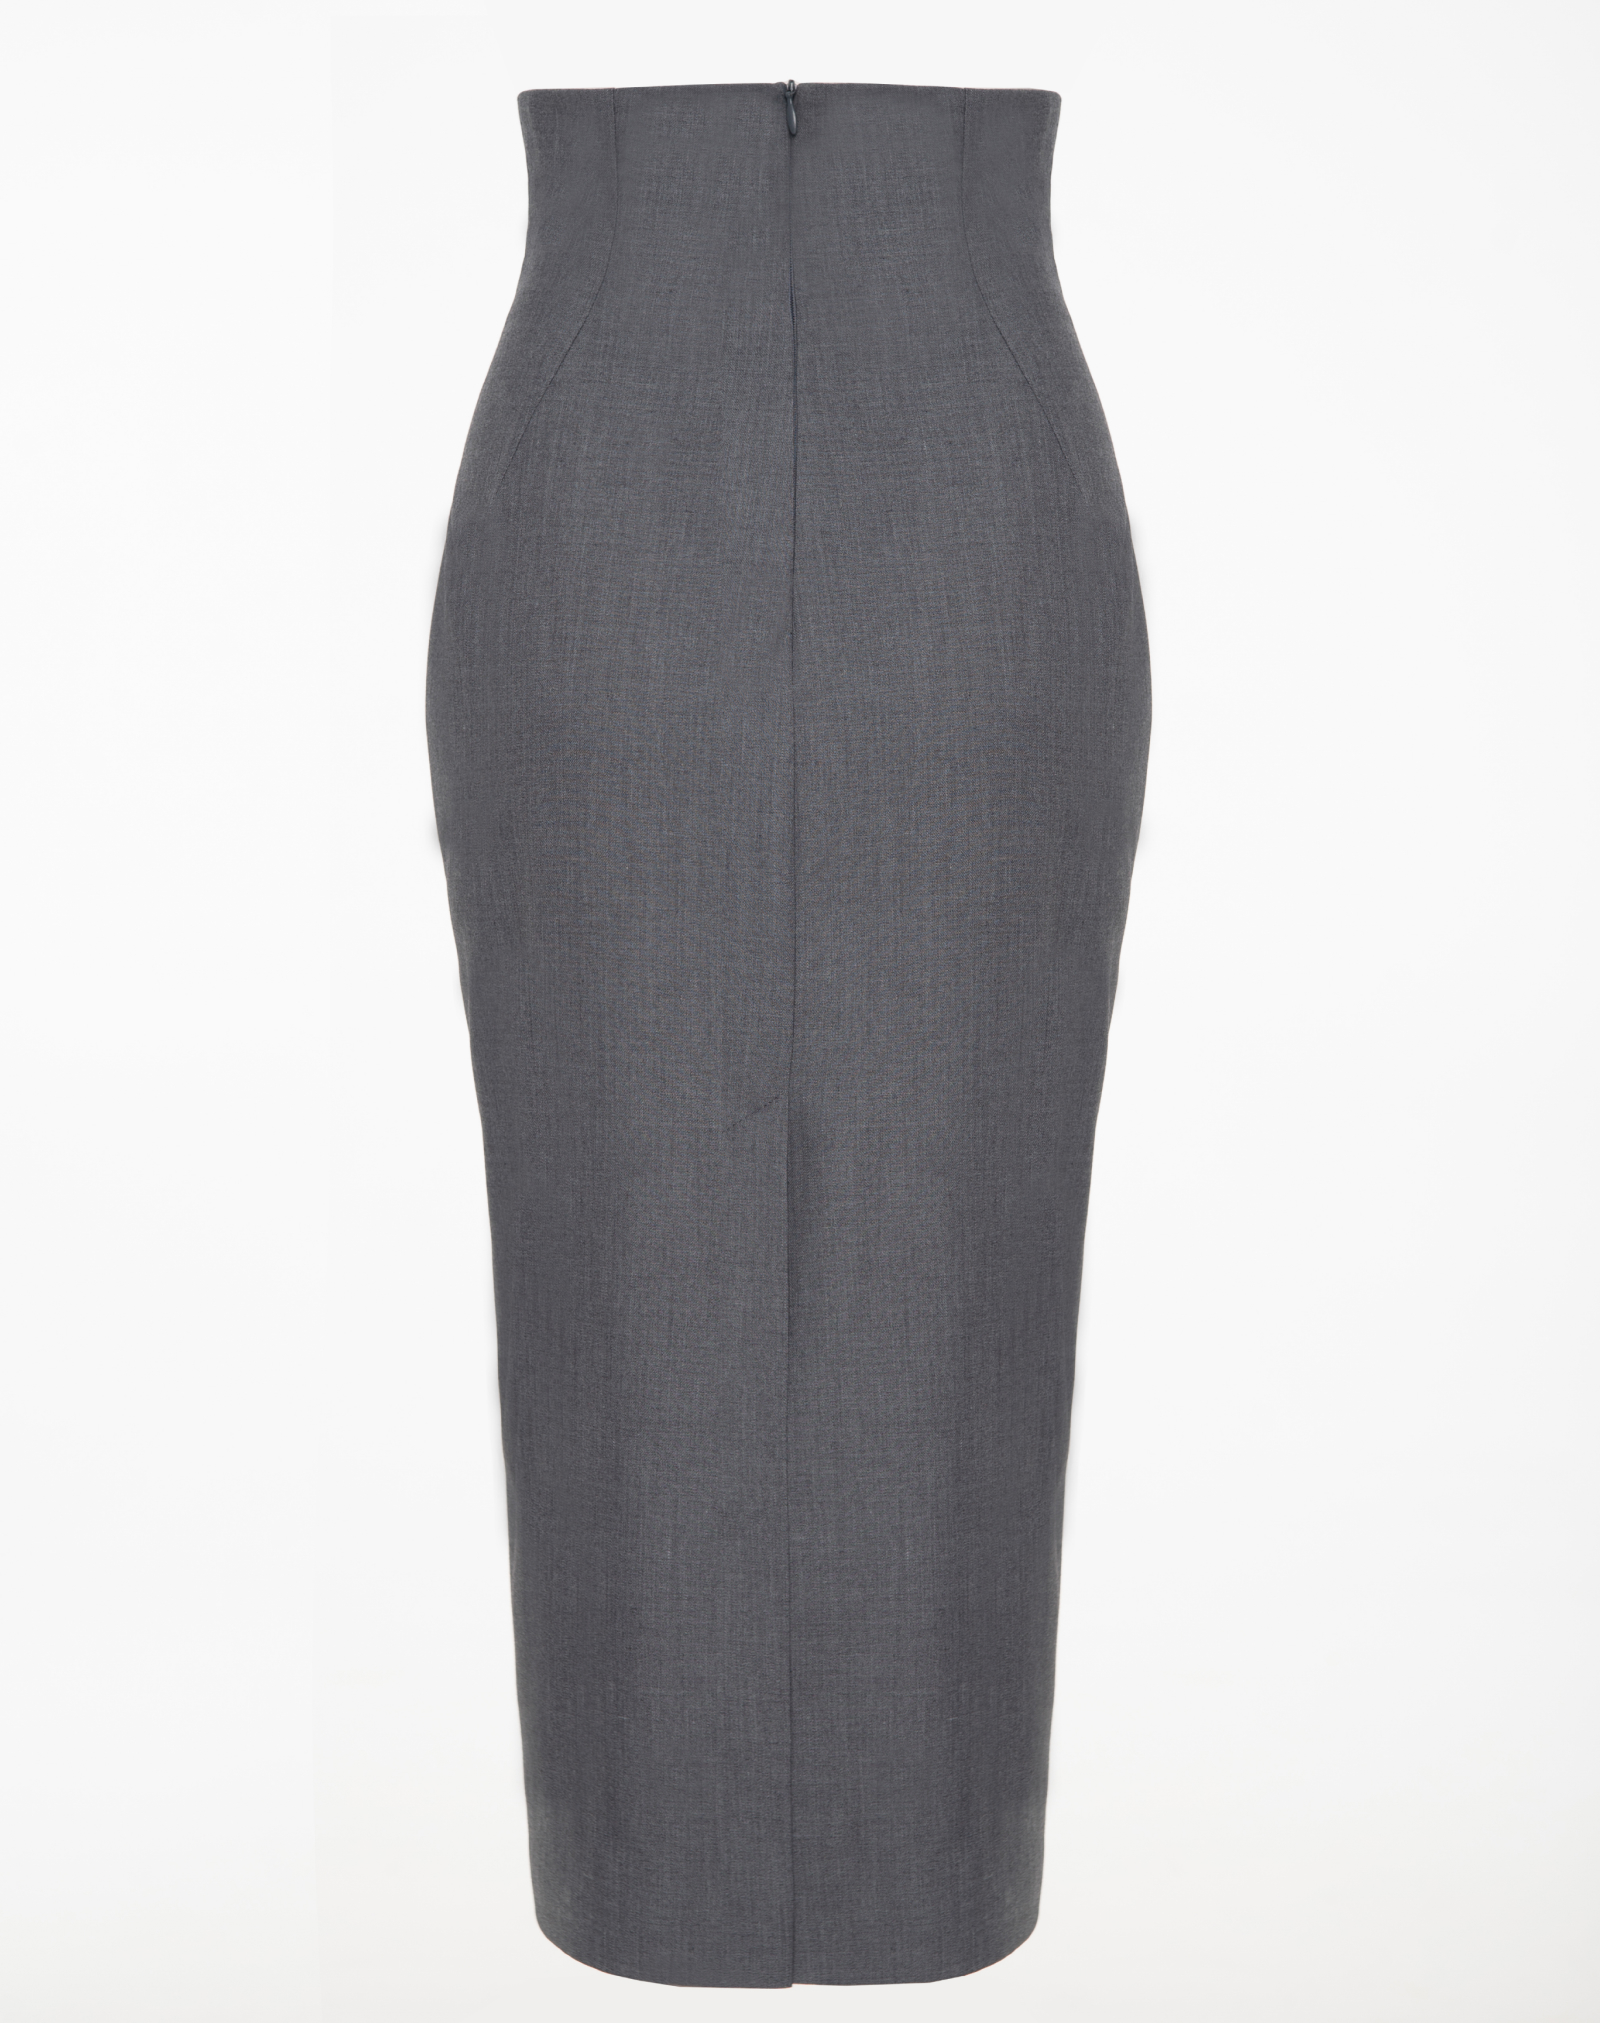 High-waisted gray pencil skirt